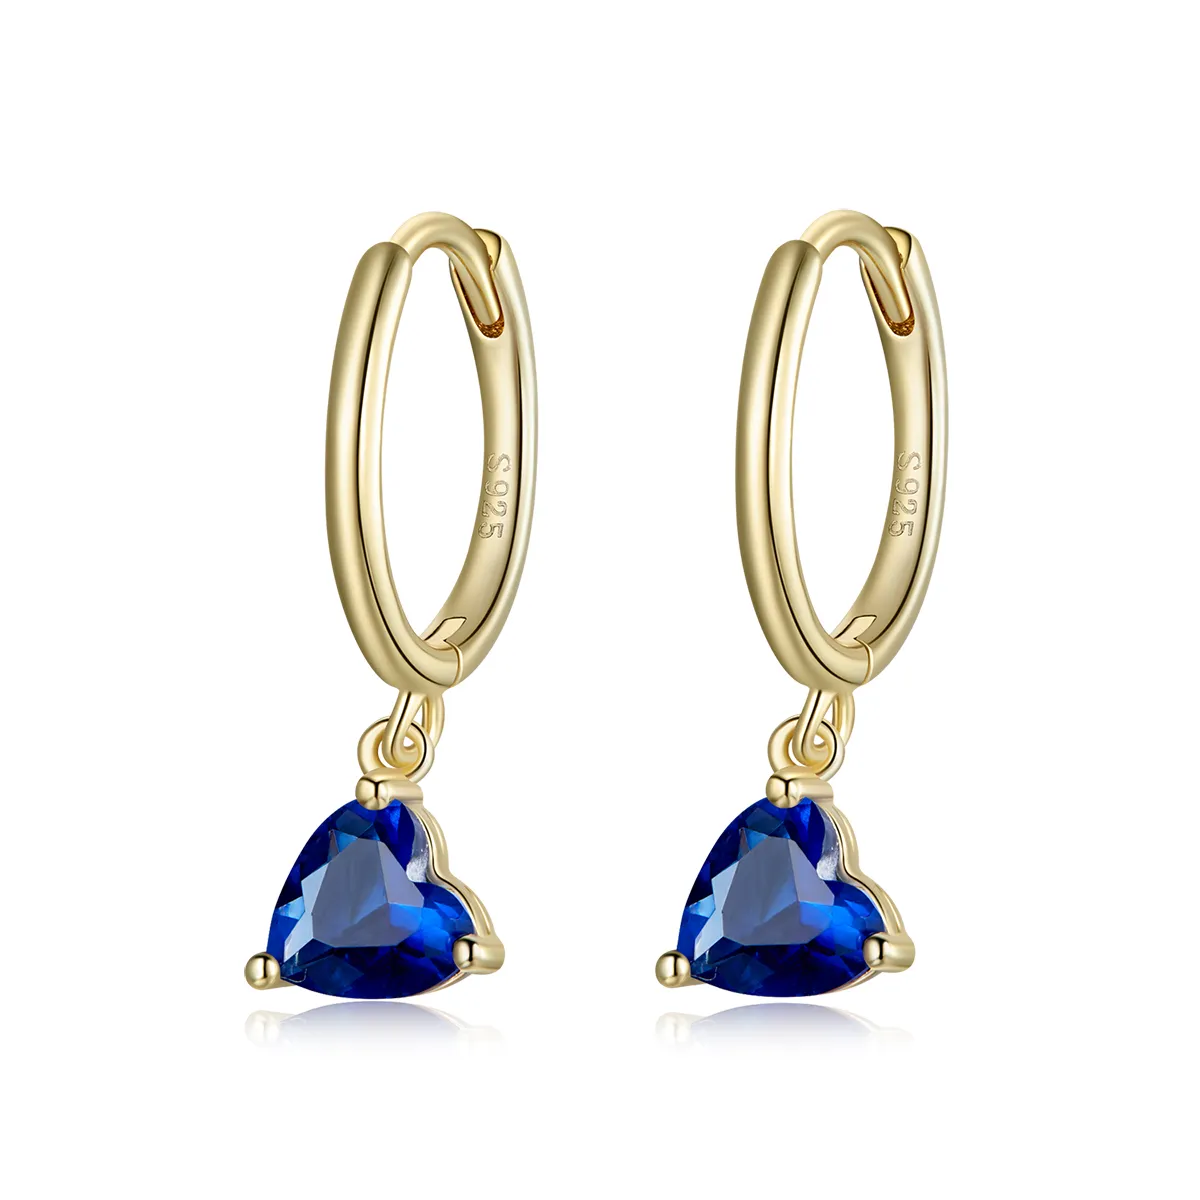 Pandora Style 18ct Gold Plated Hearts Dangle Earrings - SCE1019-BU